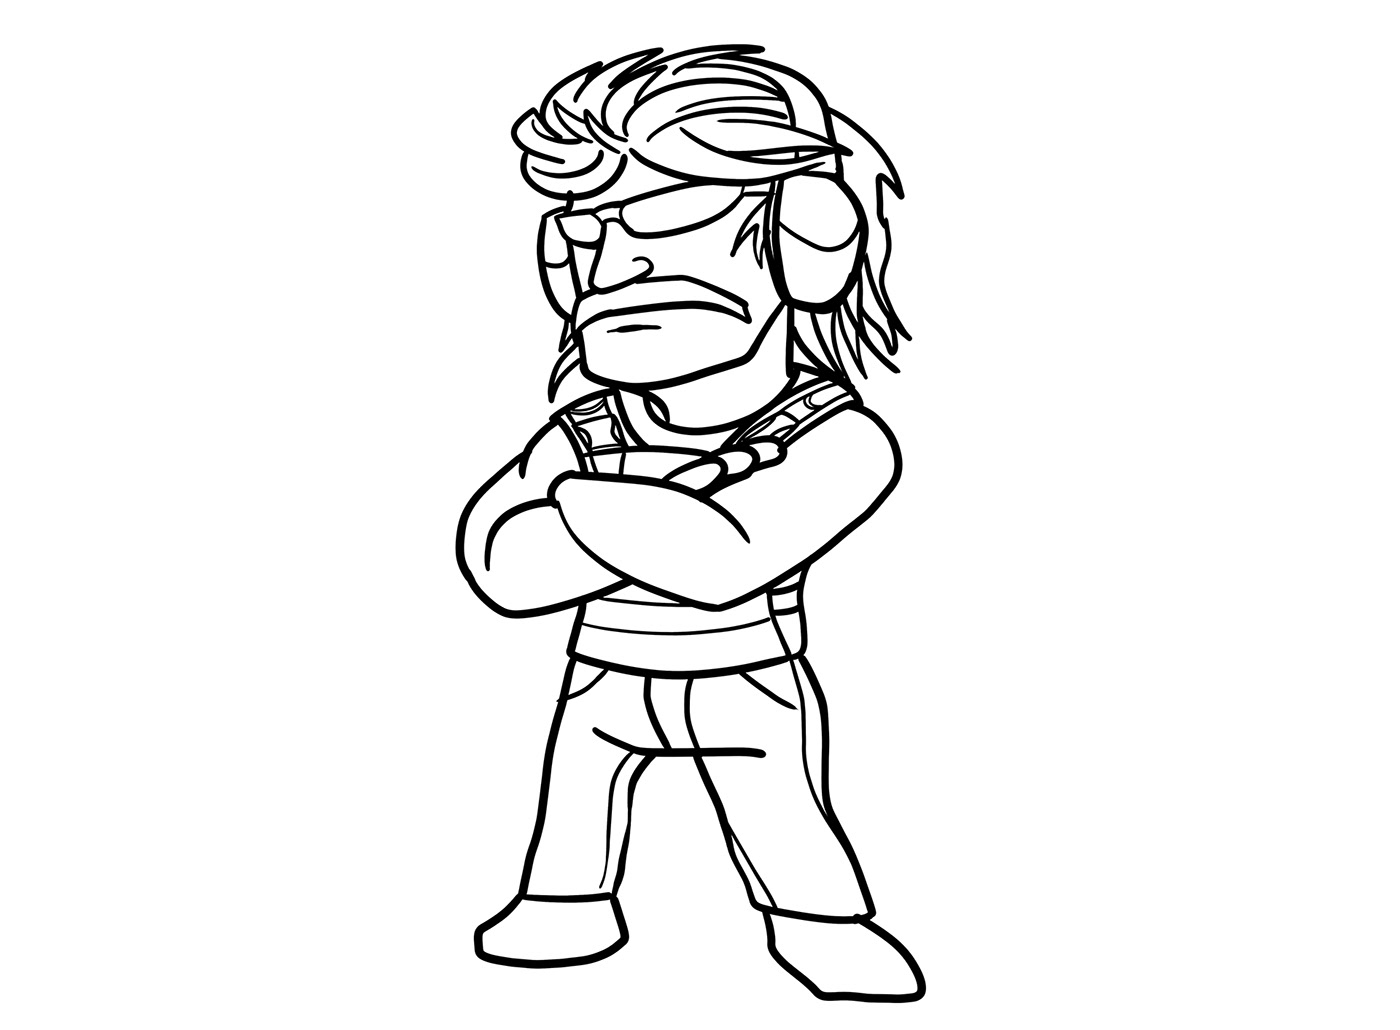 DrDisrespect twitch streamer Twitch mascot design character illustration illustration tutorial